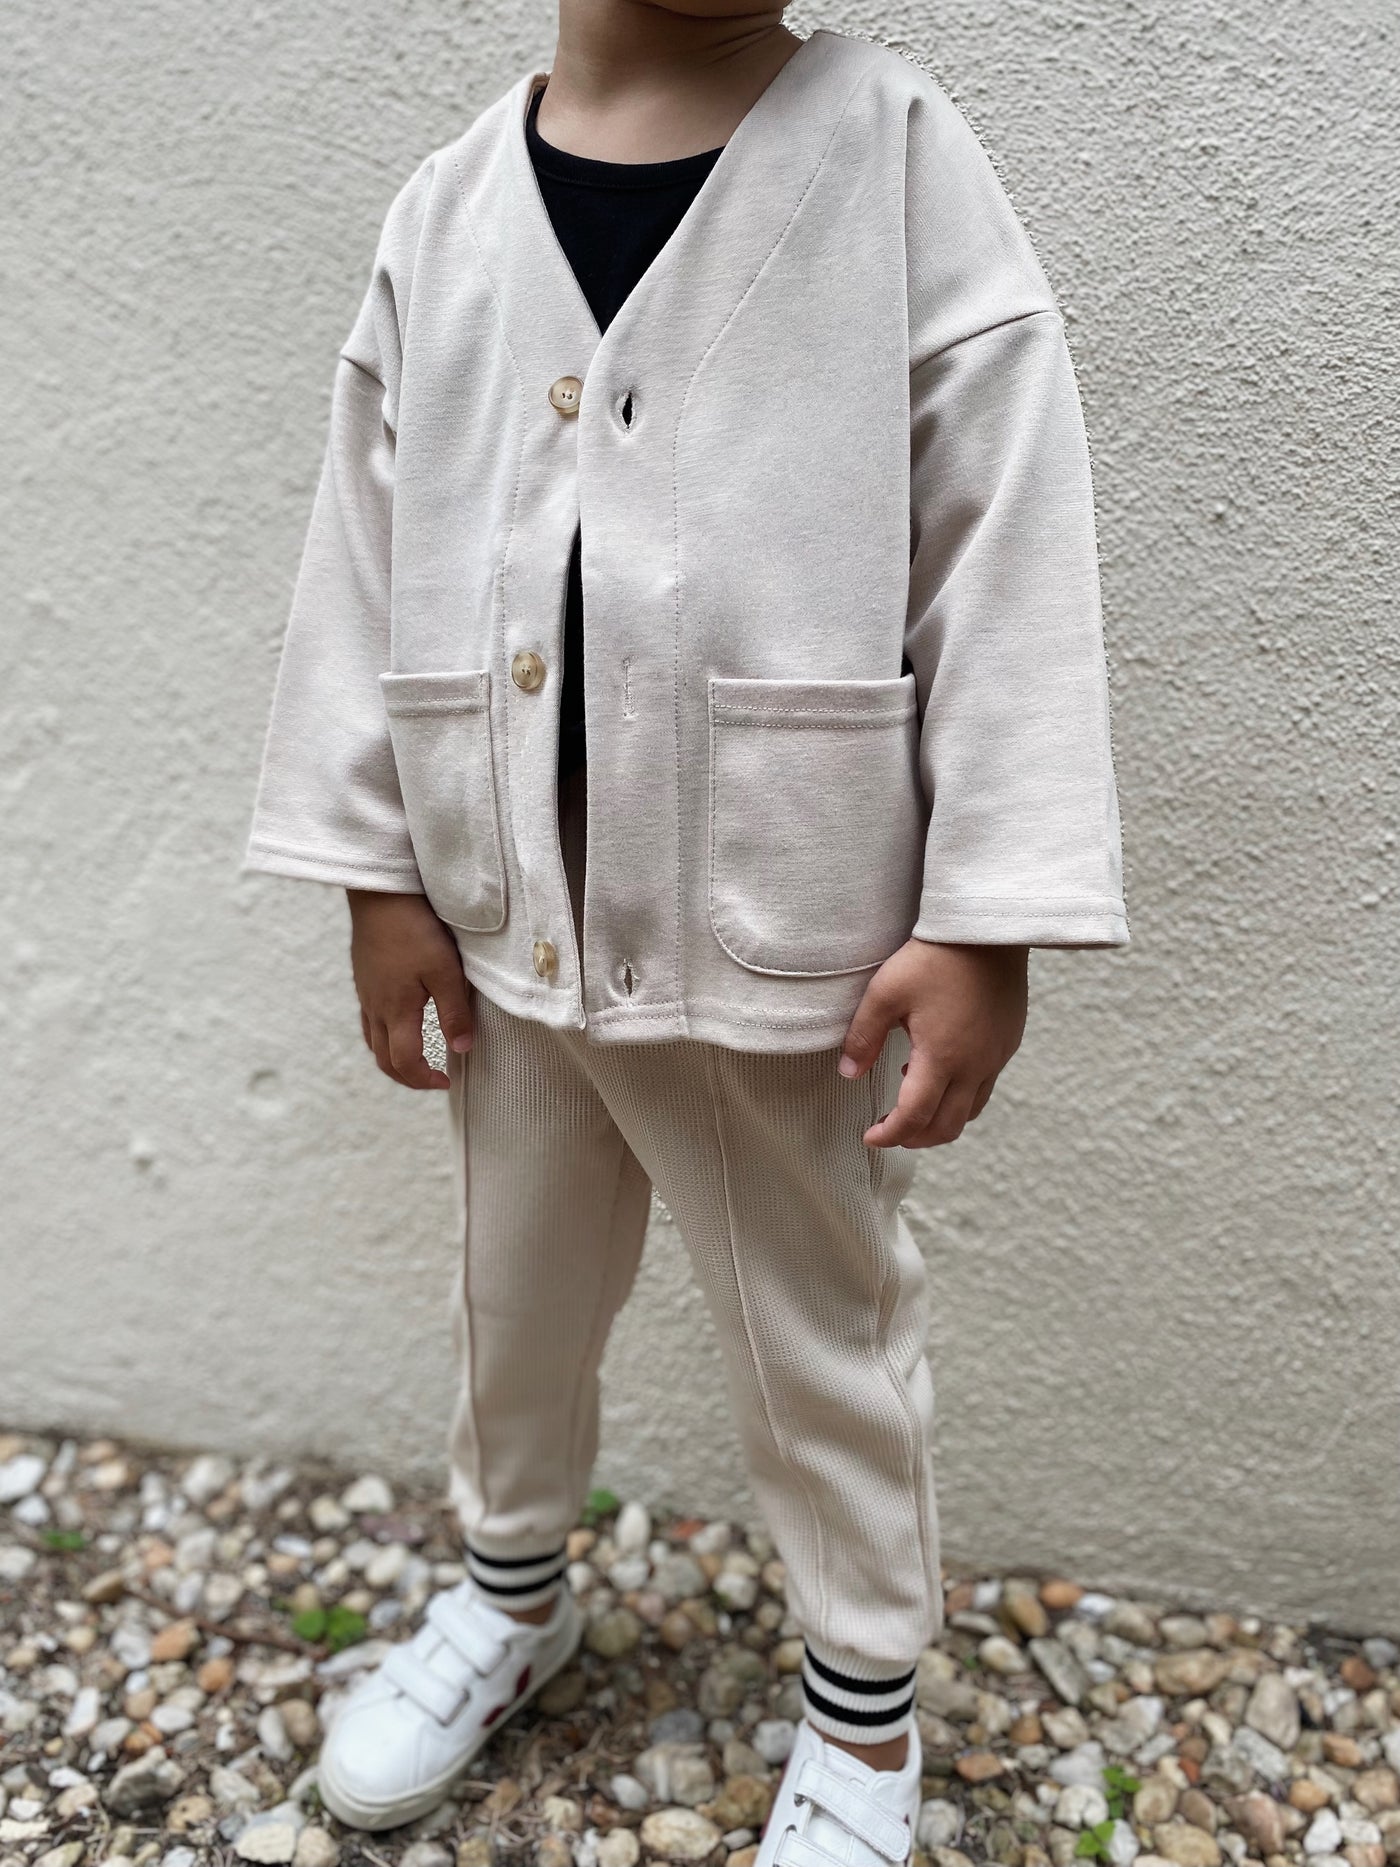 Gender Neutral Kids Clothing | Bonito cardigan │ Beige